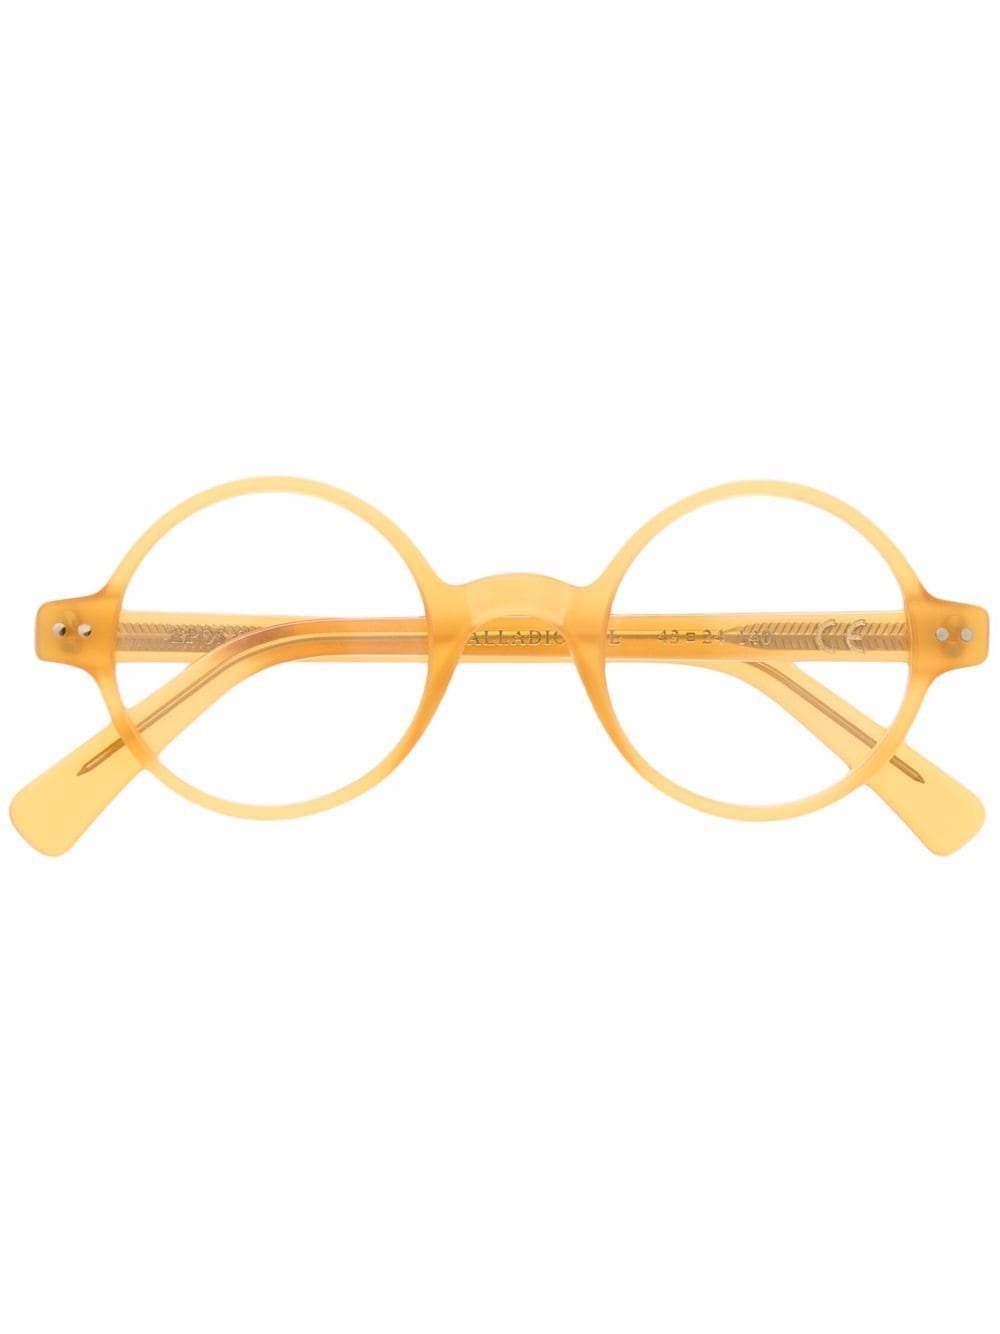 Palladio round-frame glasses